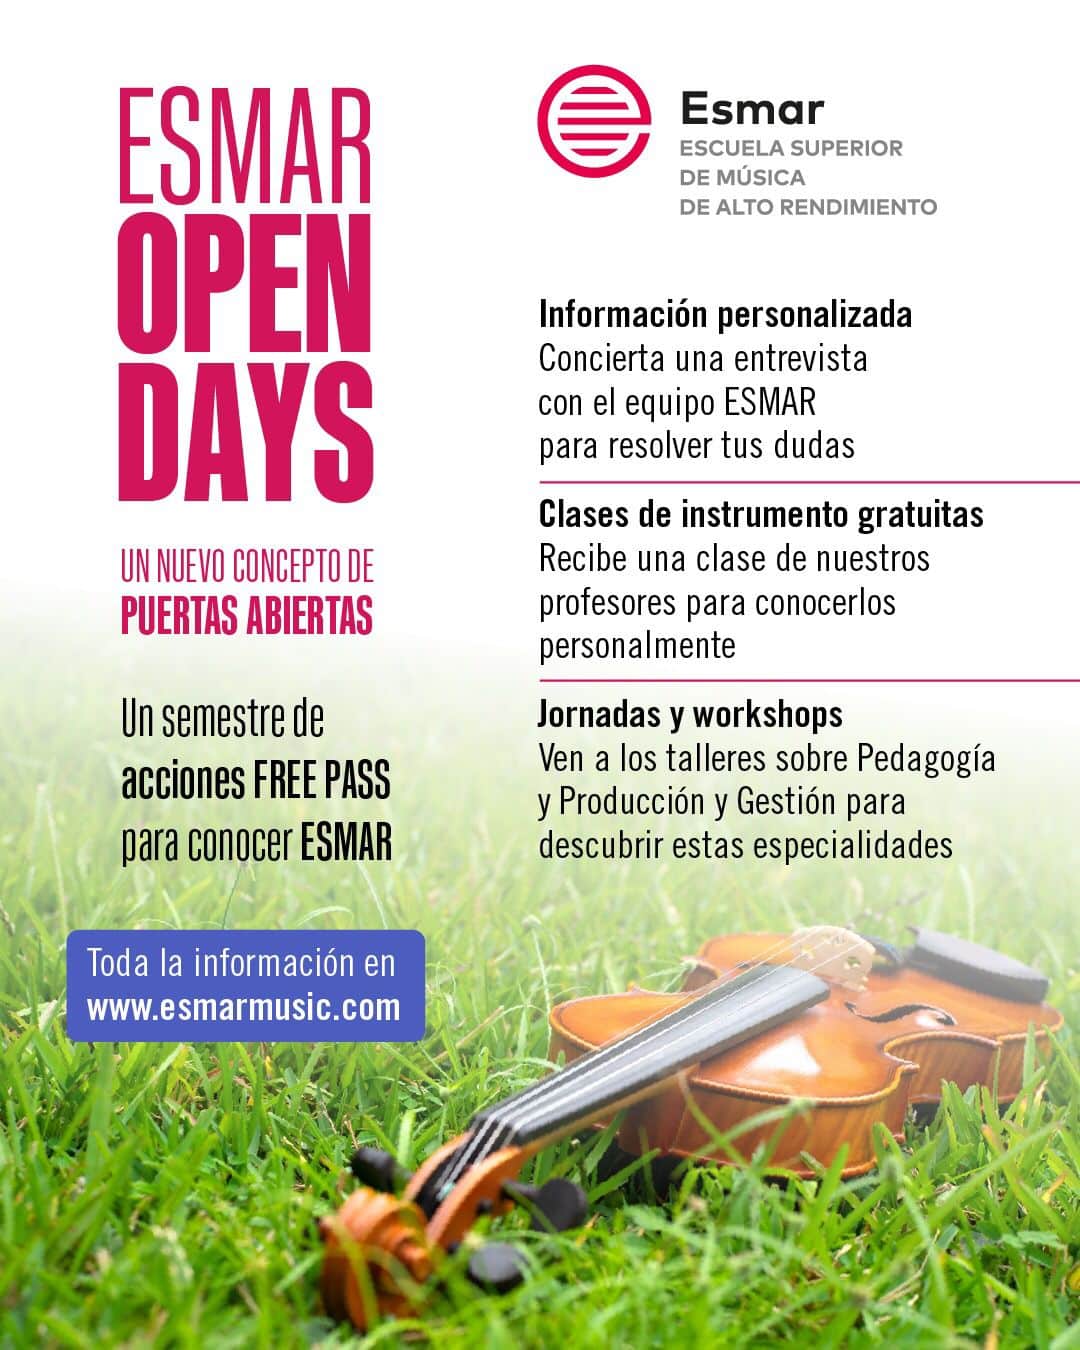 Esmar Open Days